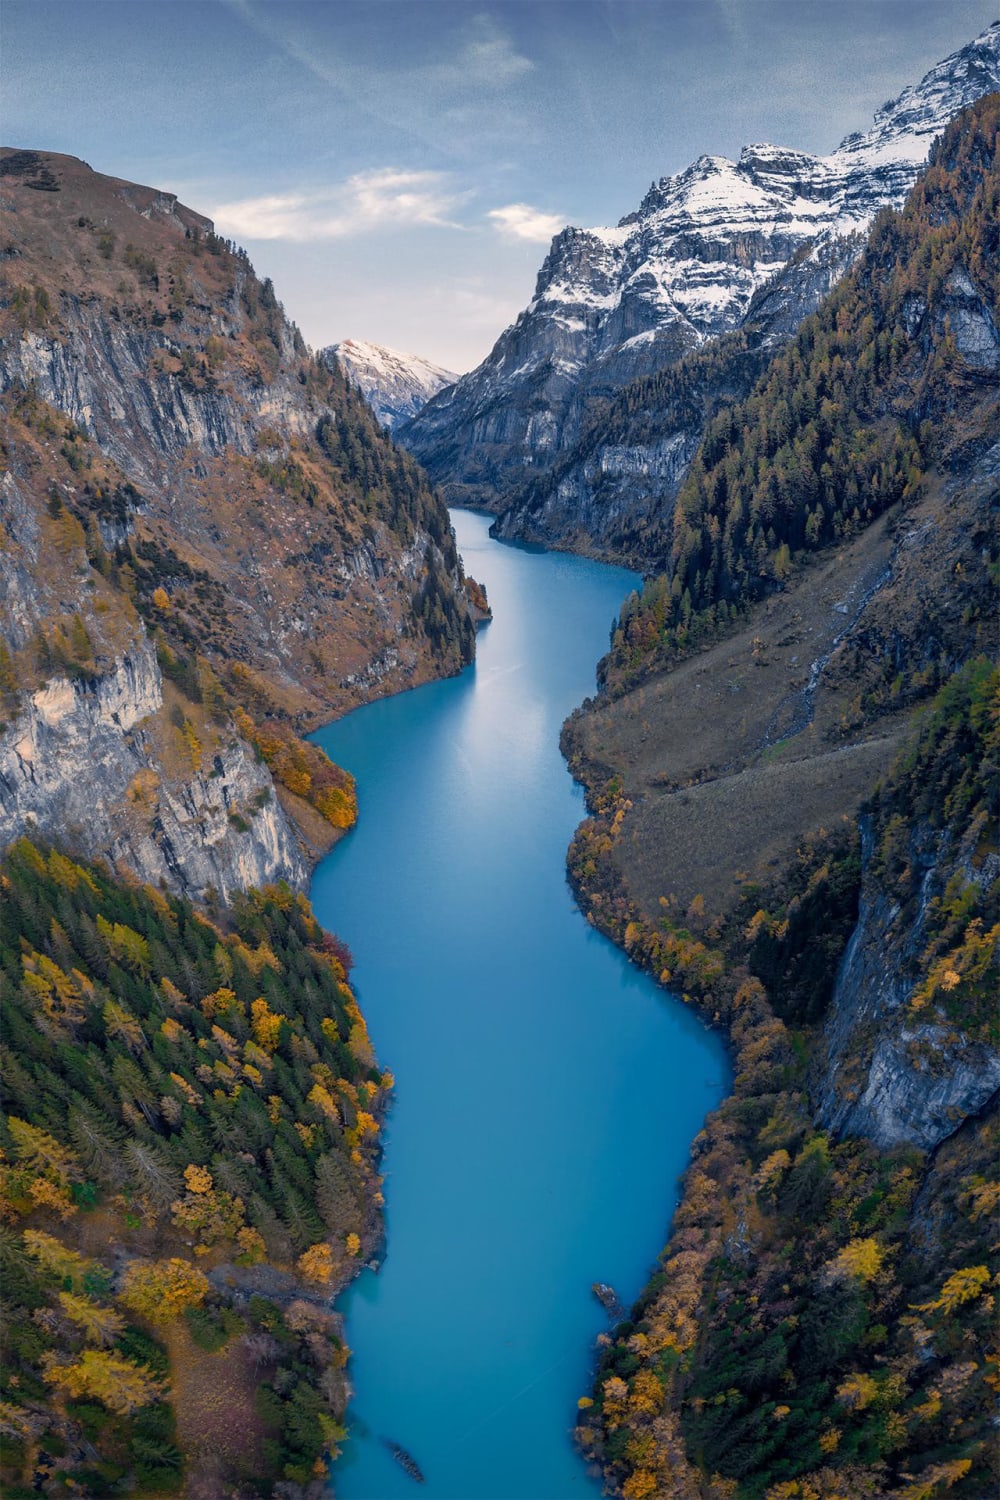 Alpine Lake in Switzerland IG @holysh0t